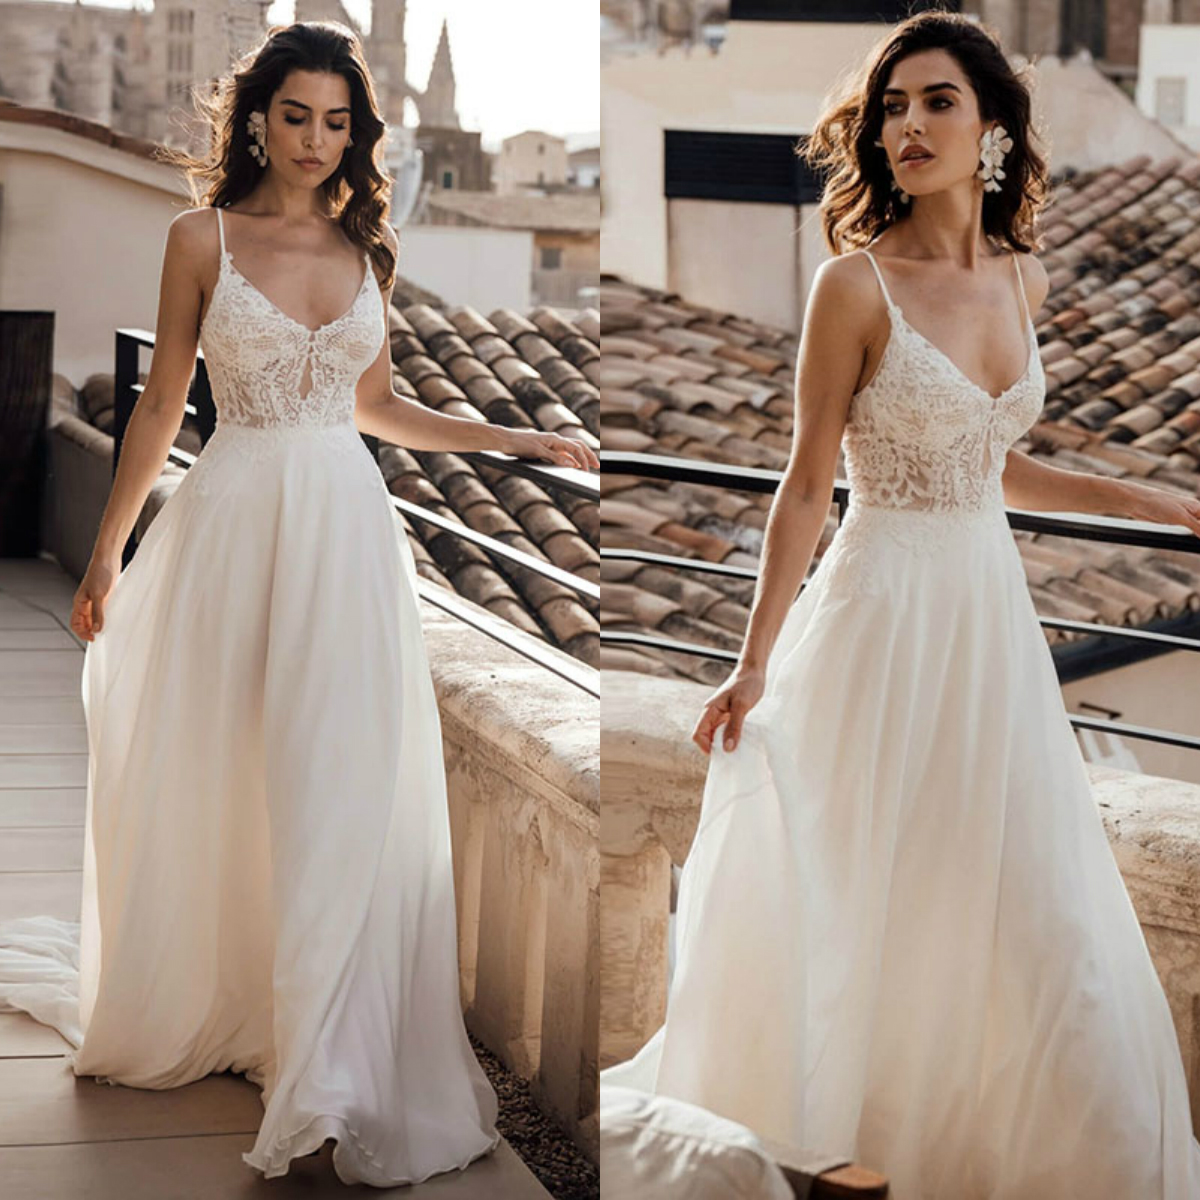 

2020 Lace Spaghetti Straps Wedding Dress Simple V Neck Empire Waist Bride Gown Floor Length Casamento Chiffon Abito Da Sposa, Khaki